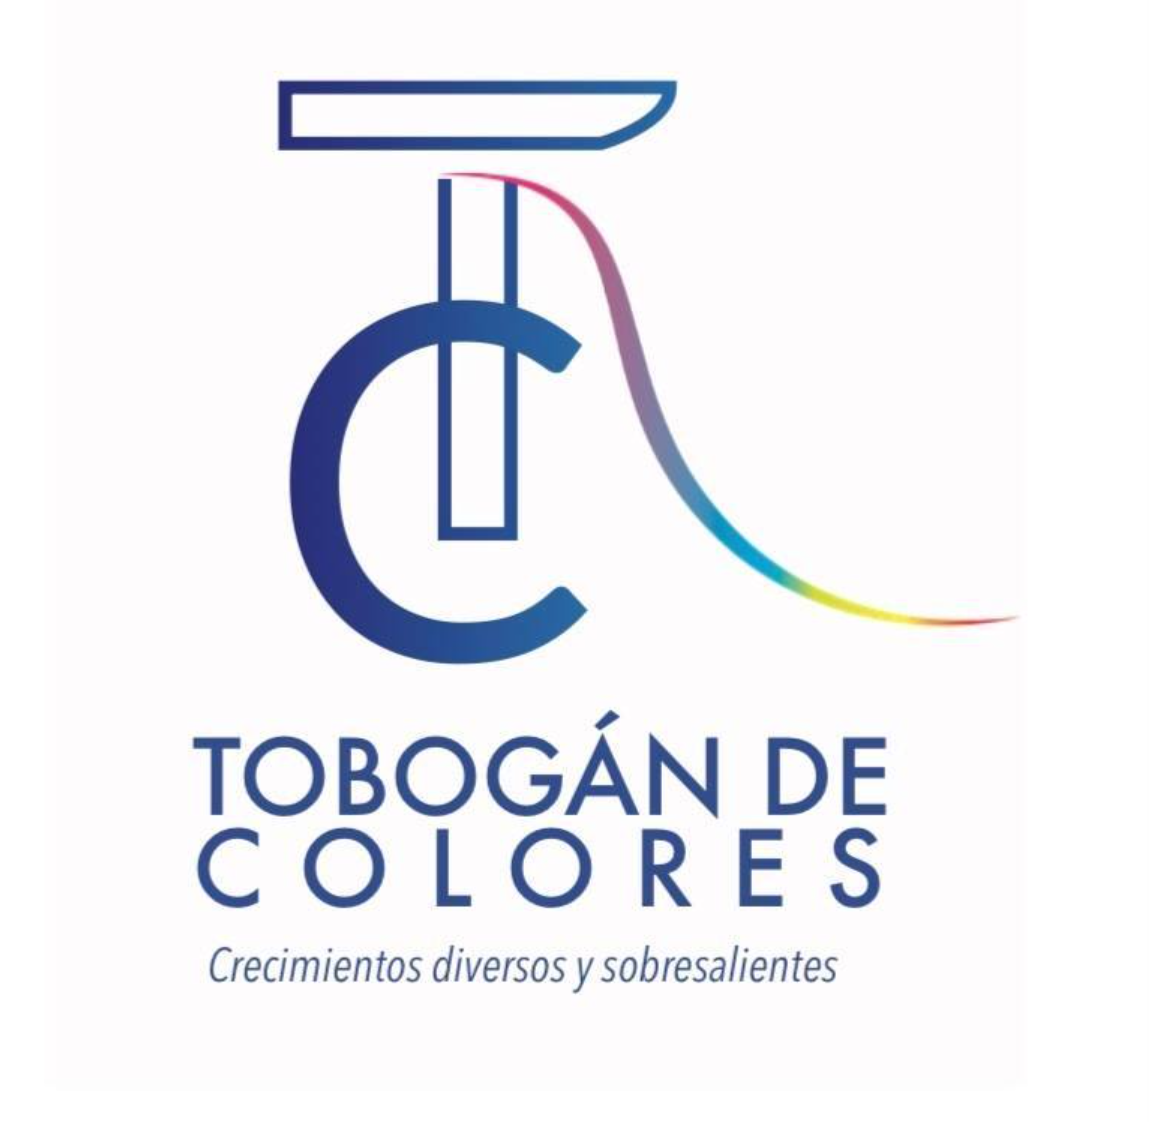 Tobogan de Colores